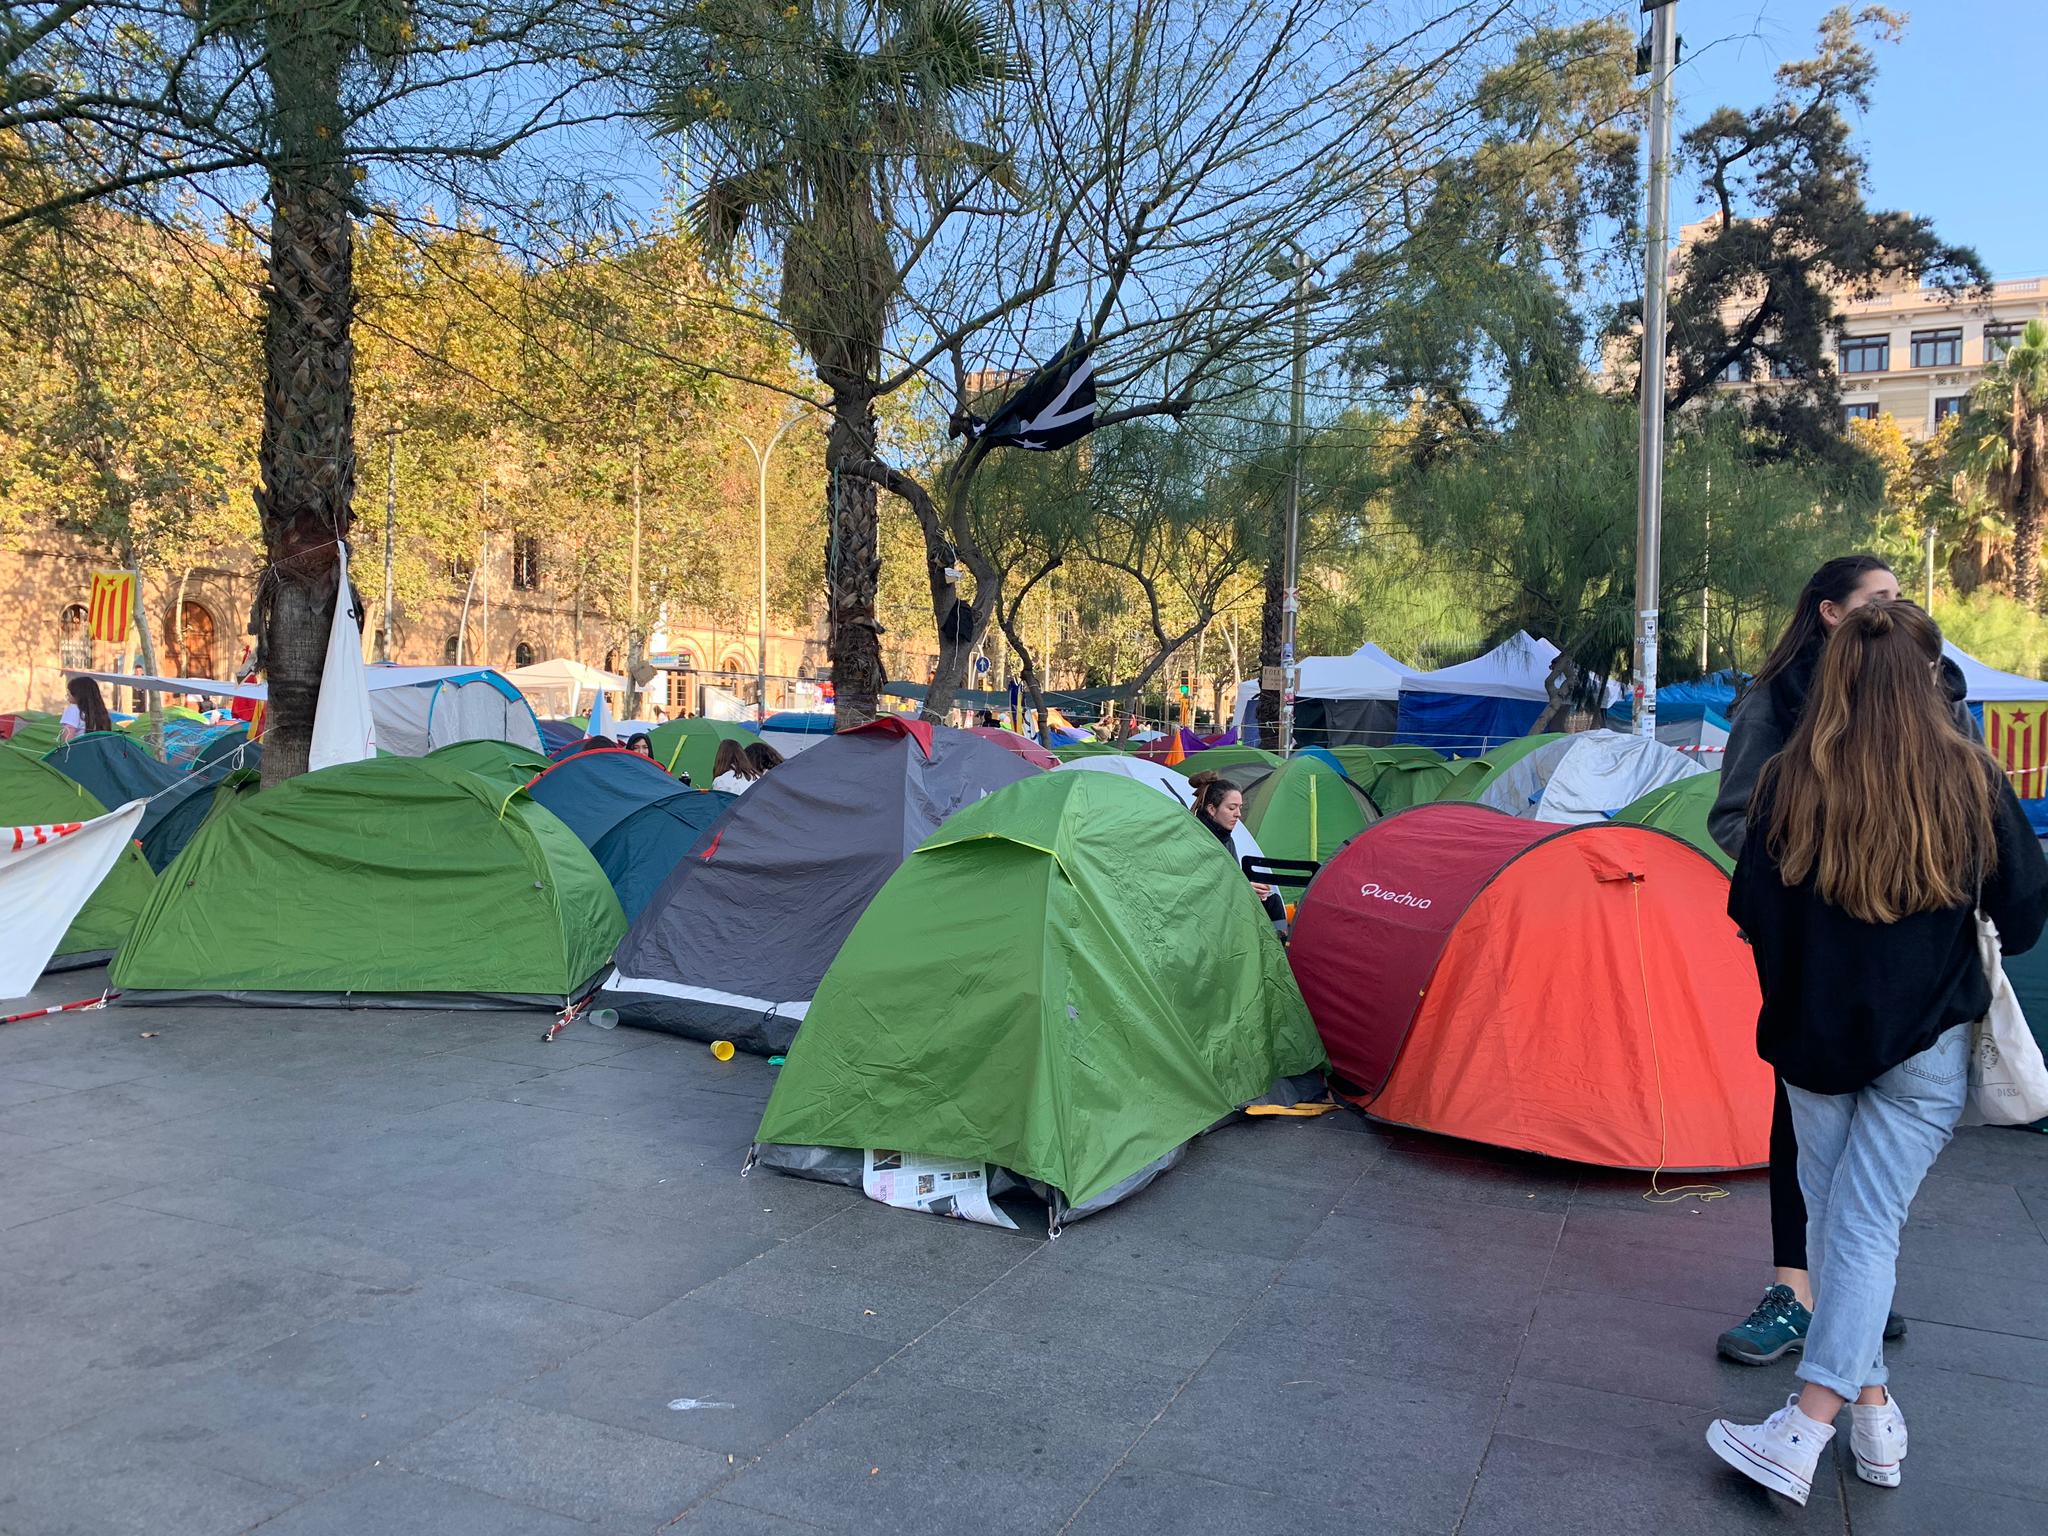 La Junta Electoral deniega la petición de Cs de desalojar la acampada de plaza Universitat